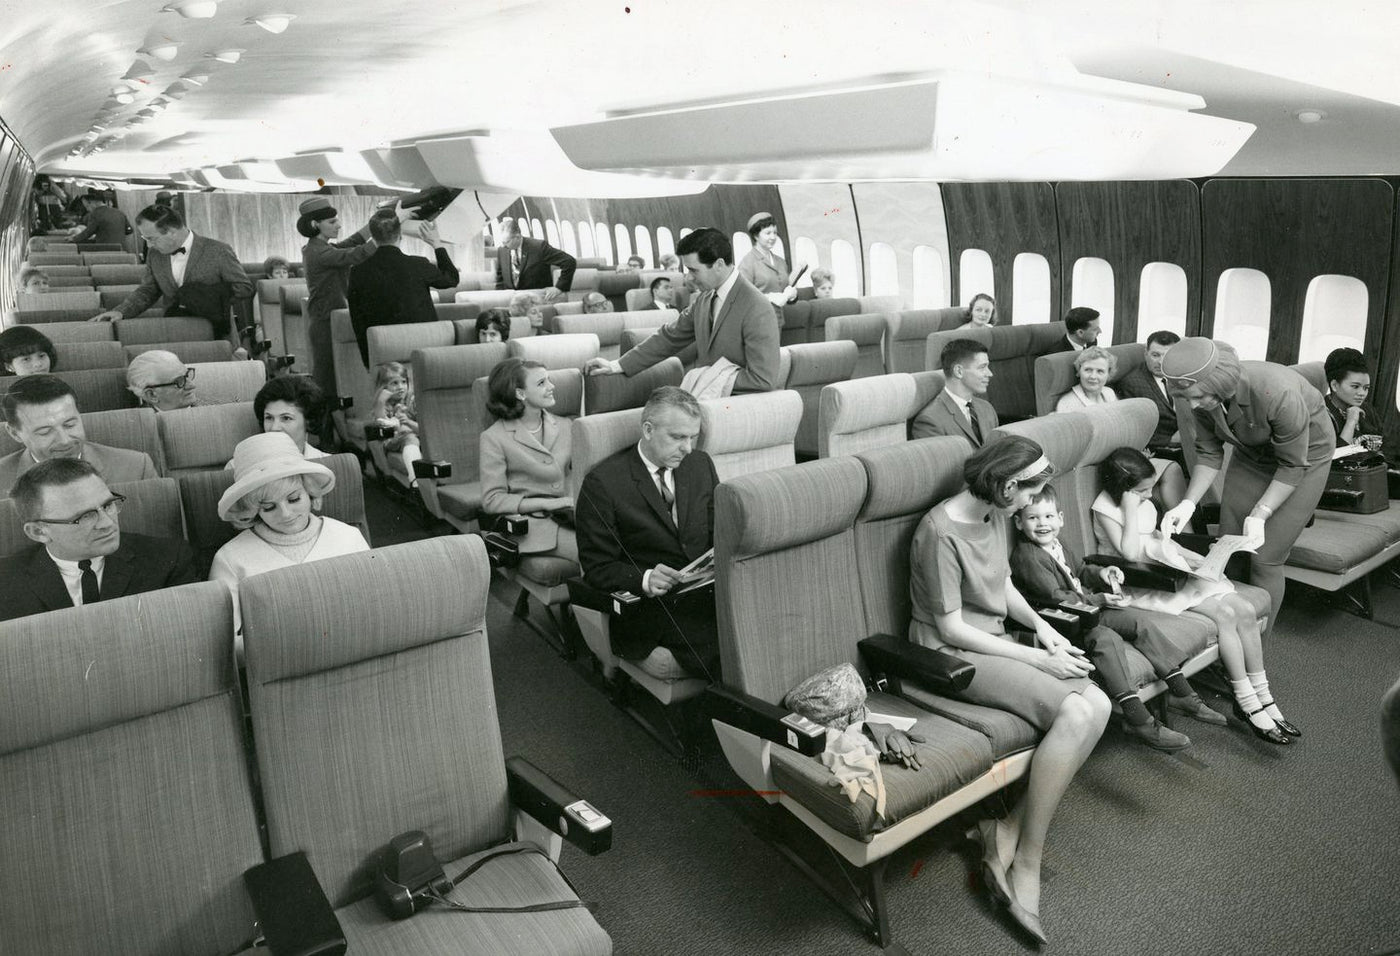 vintage airline photos